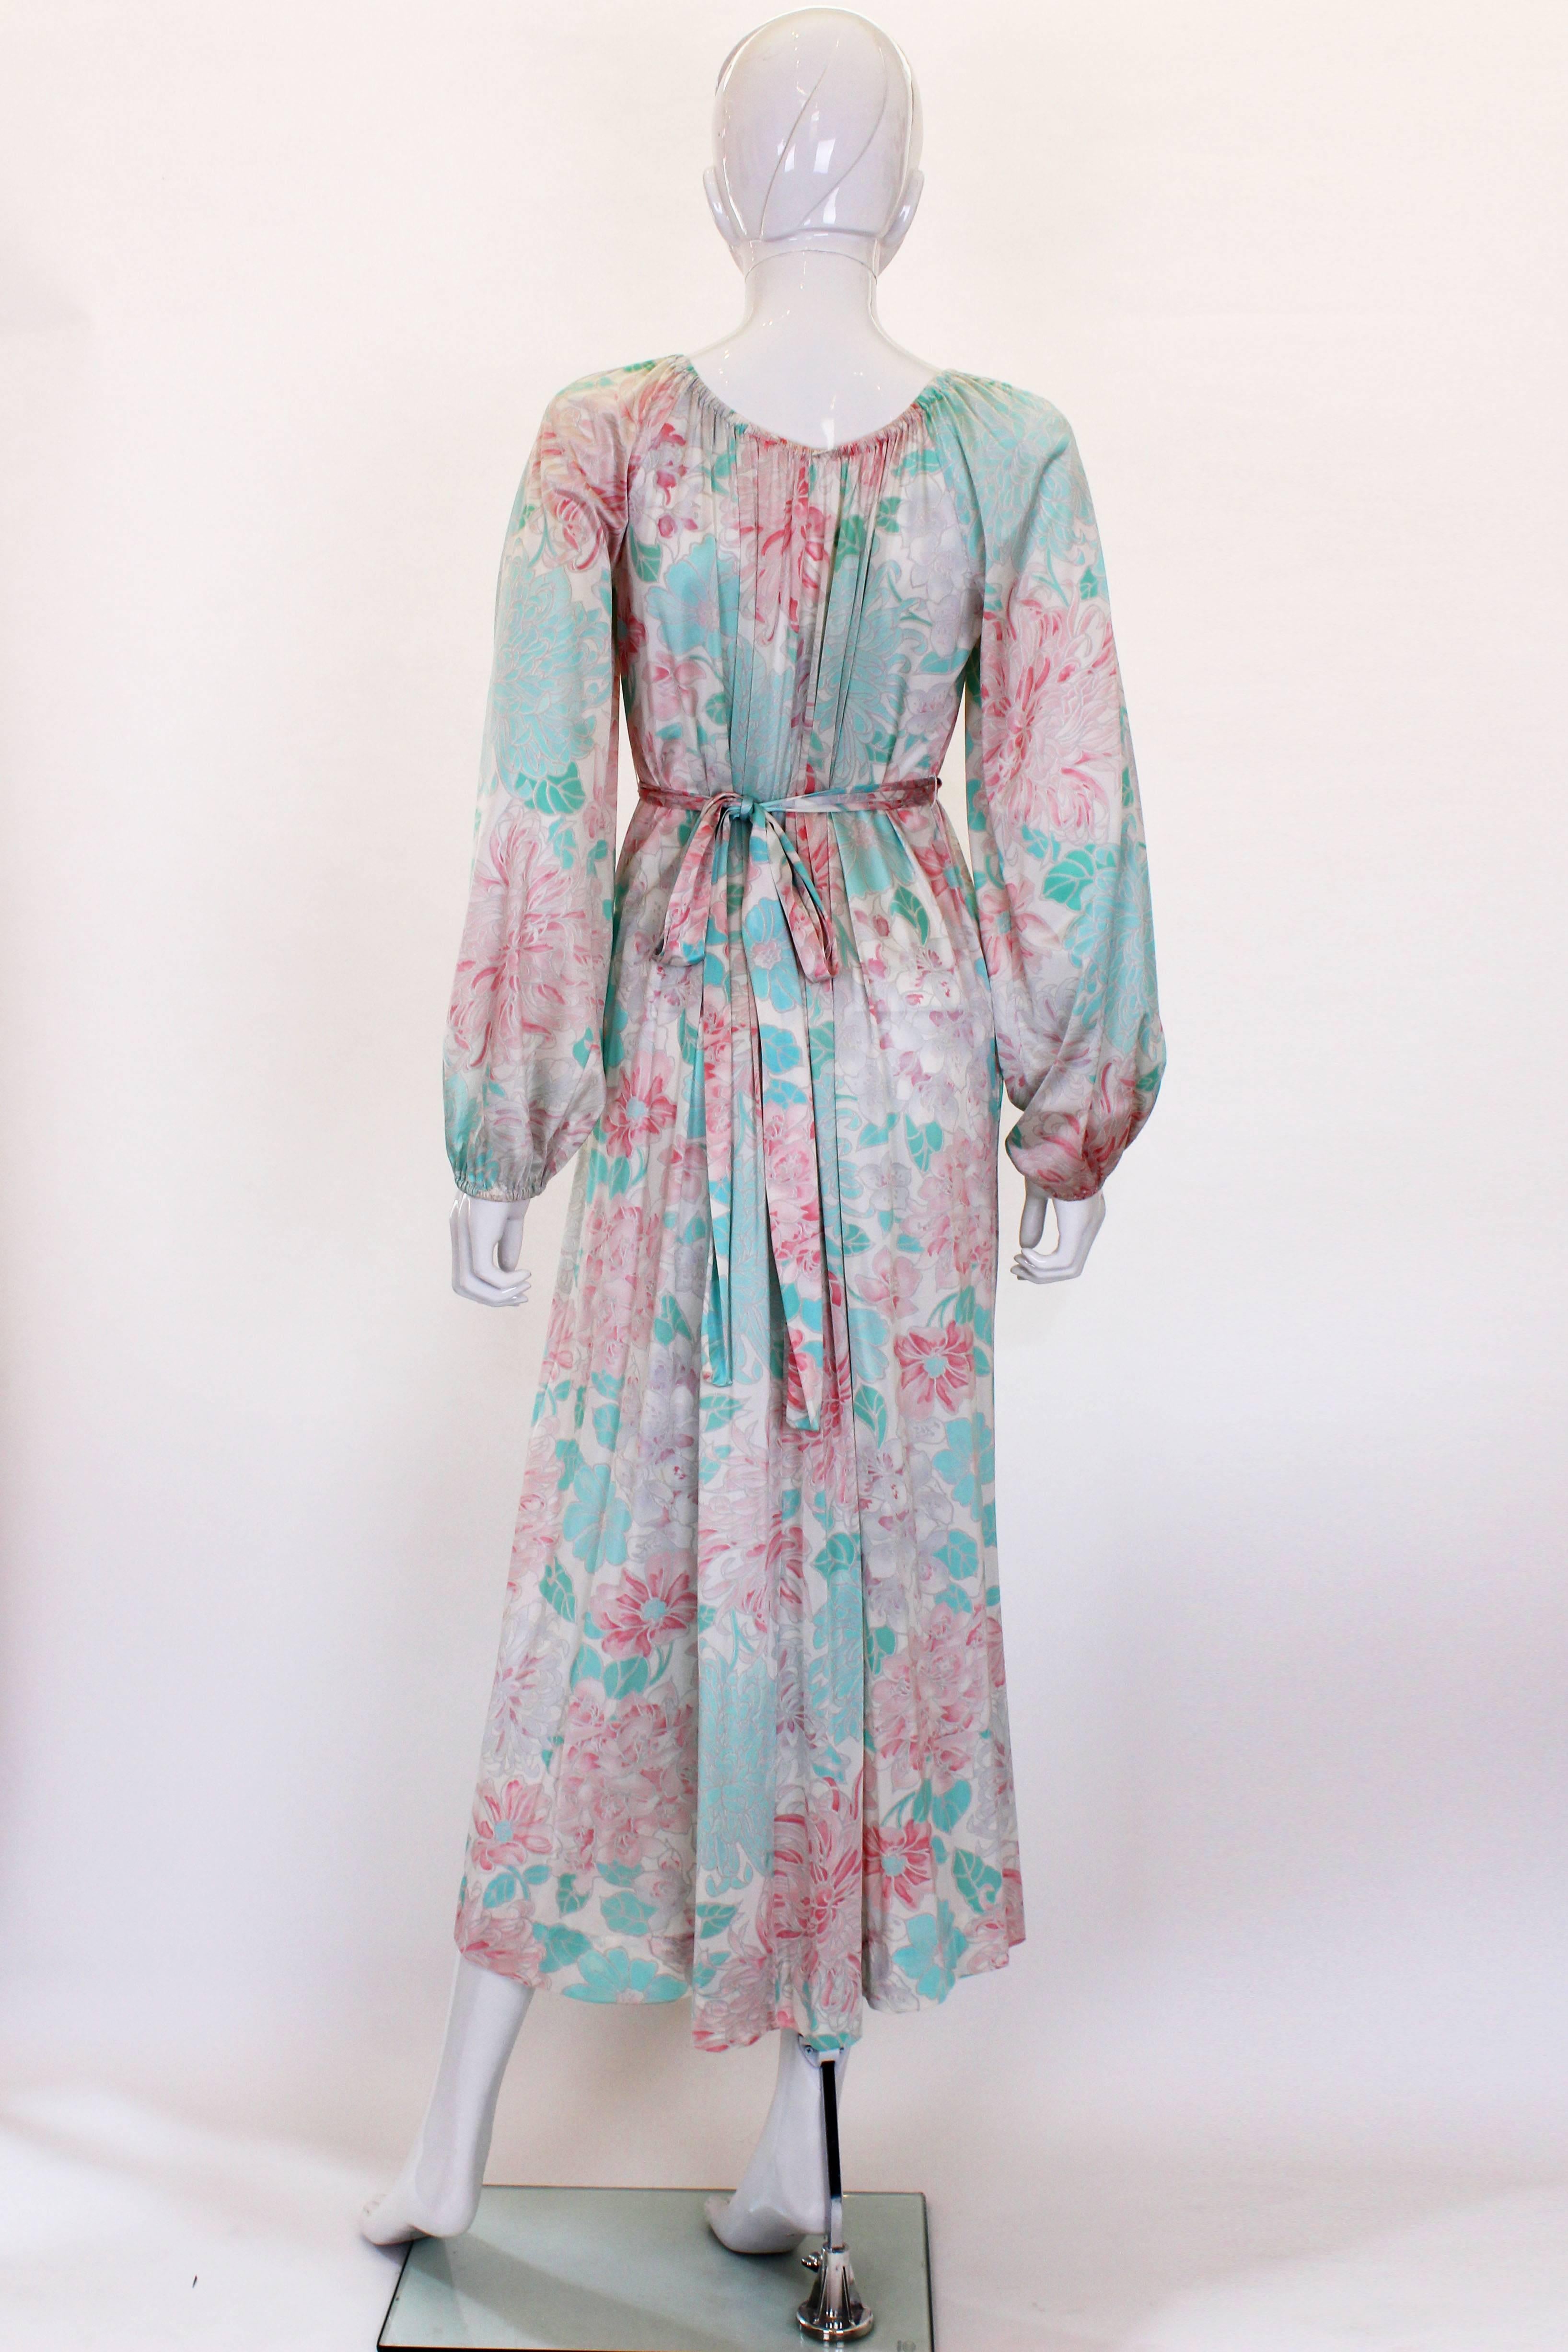 Women's 1970s Pastel Coloured Floral Print Jersey Dress